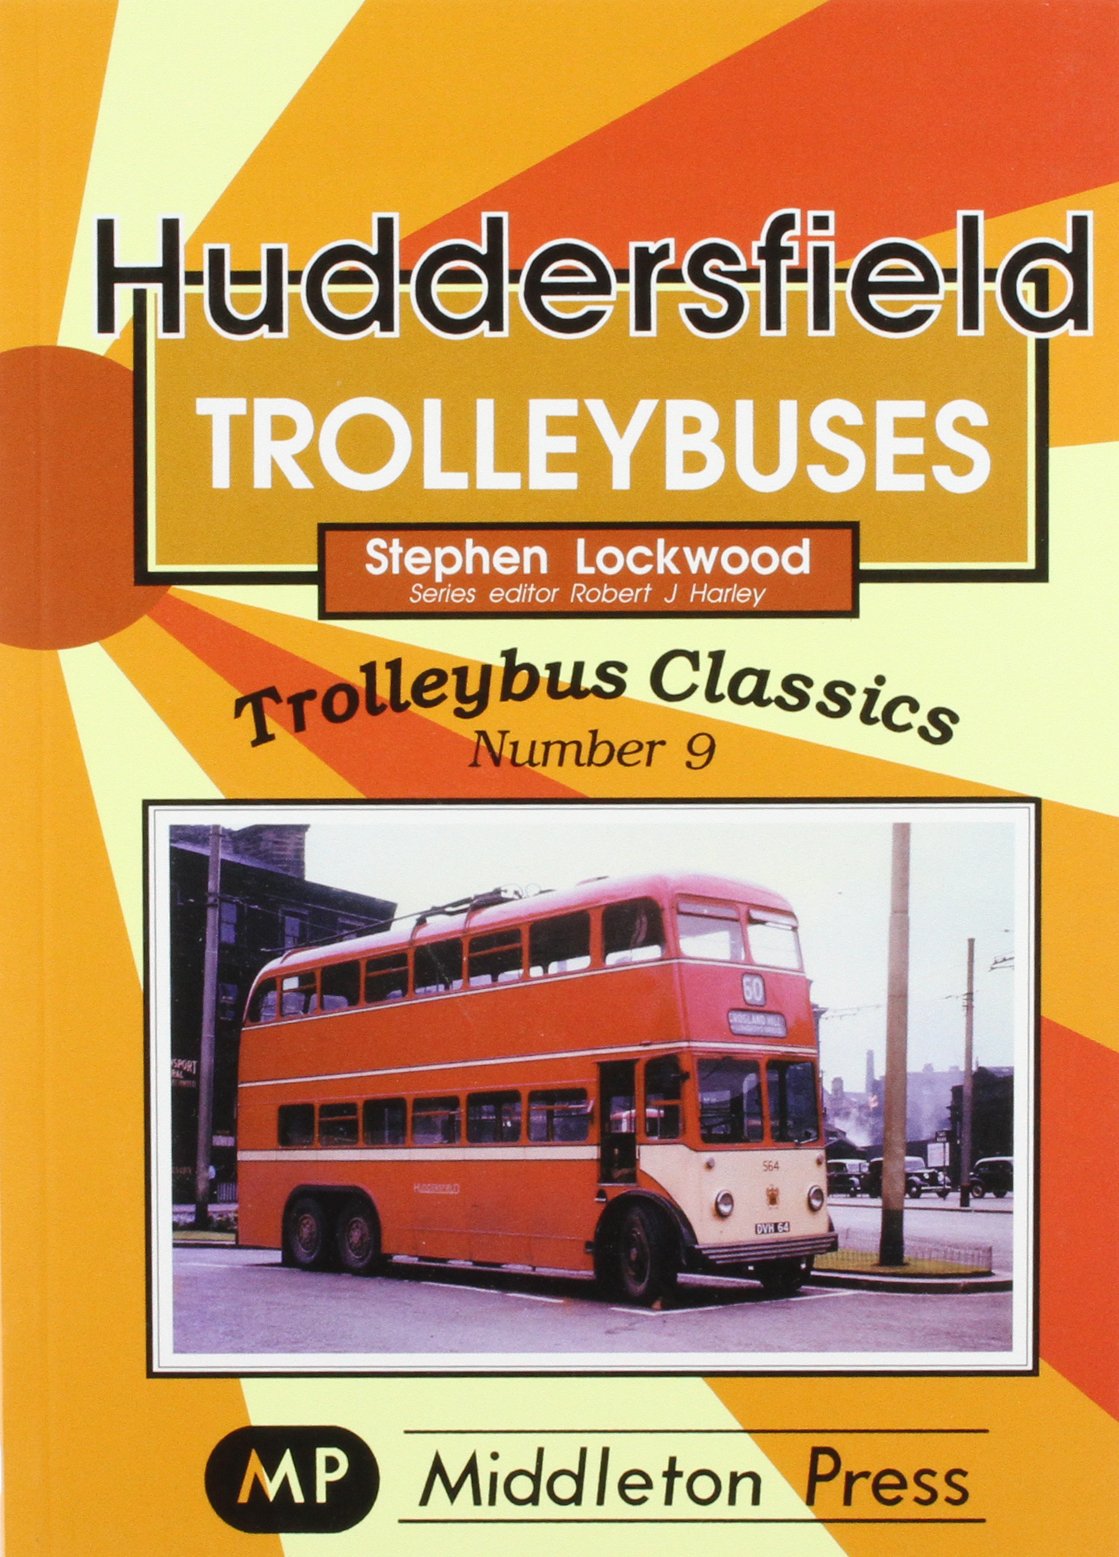 Trolleybus Classics Huddersfield Trolleybuses